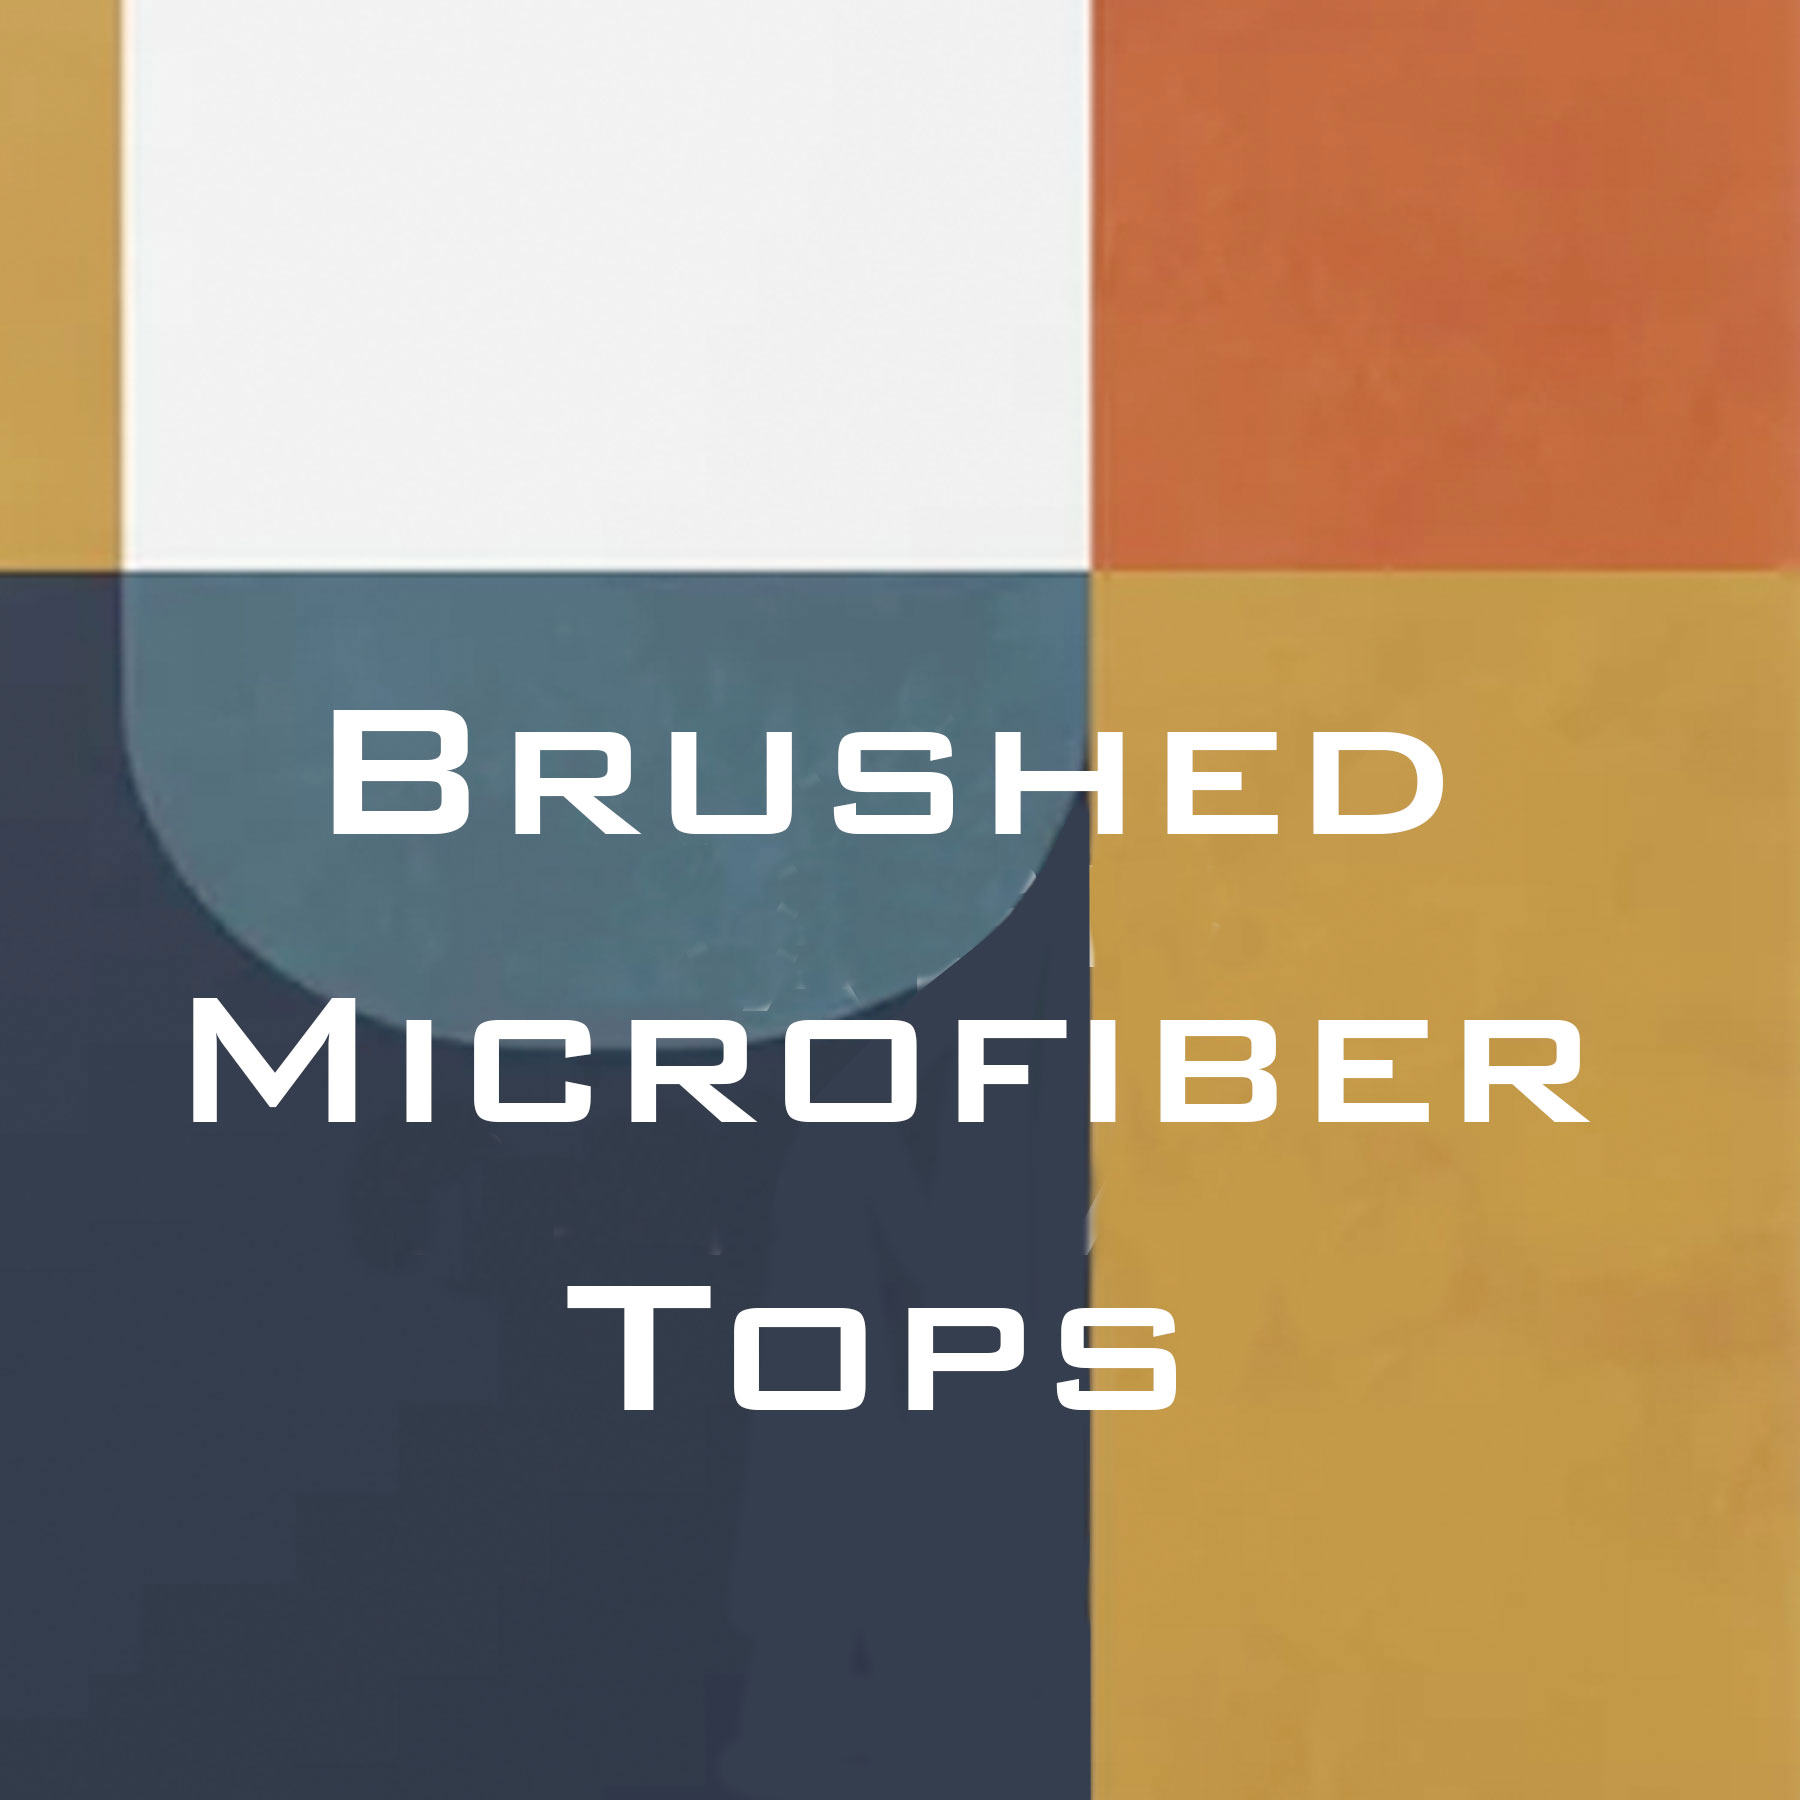 Wholesale Brushed Microfiber Tops